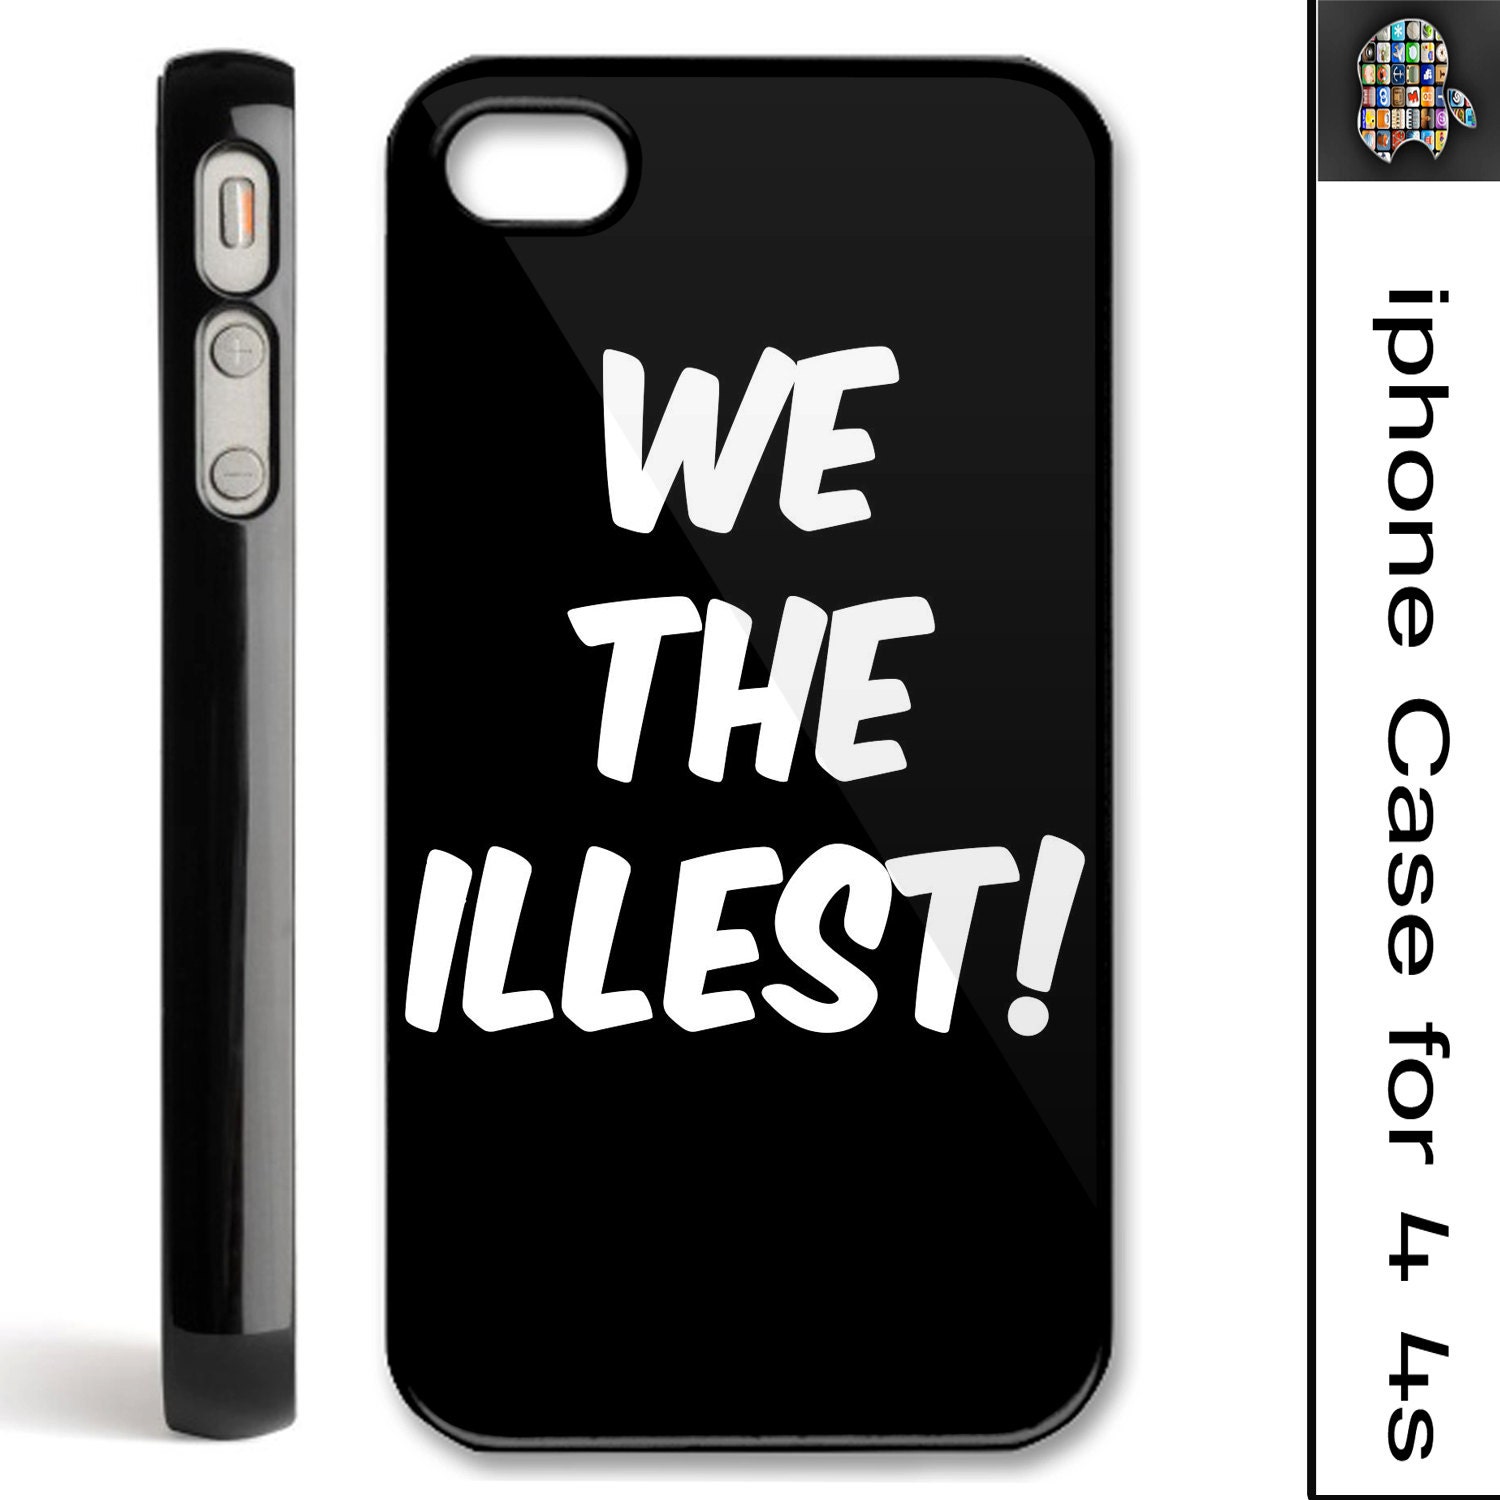 Iphone 5 Cases Apple Brand